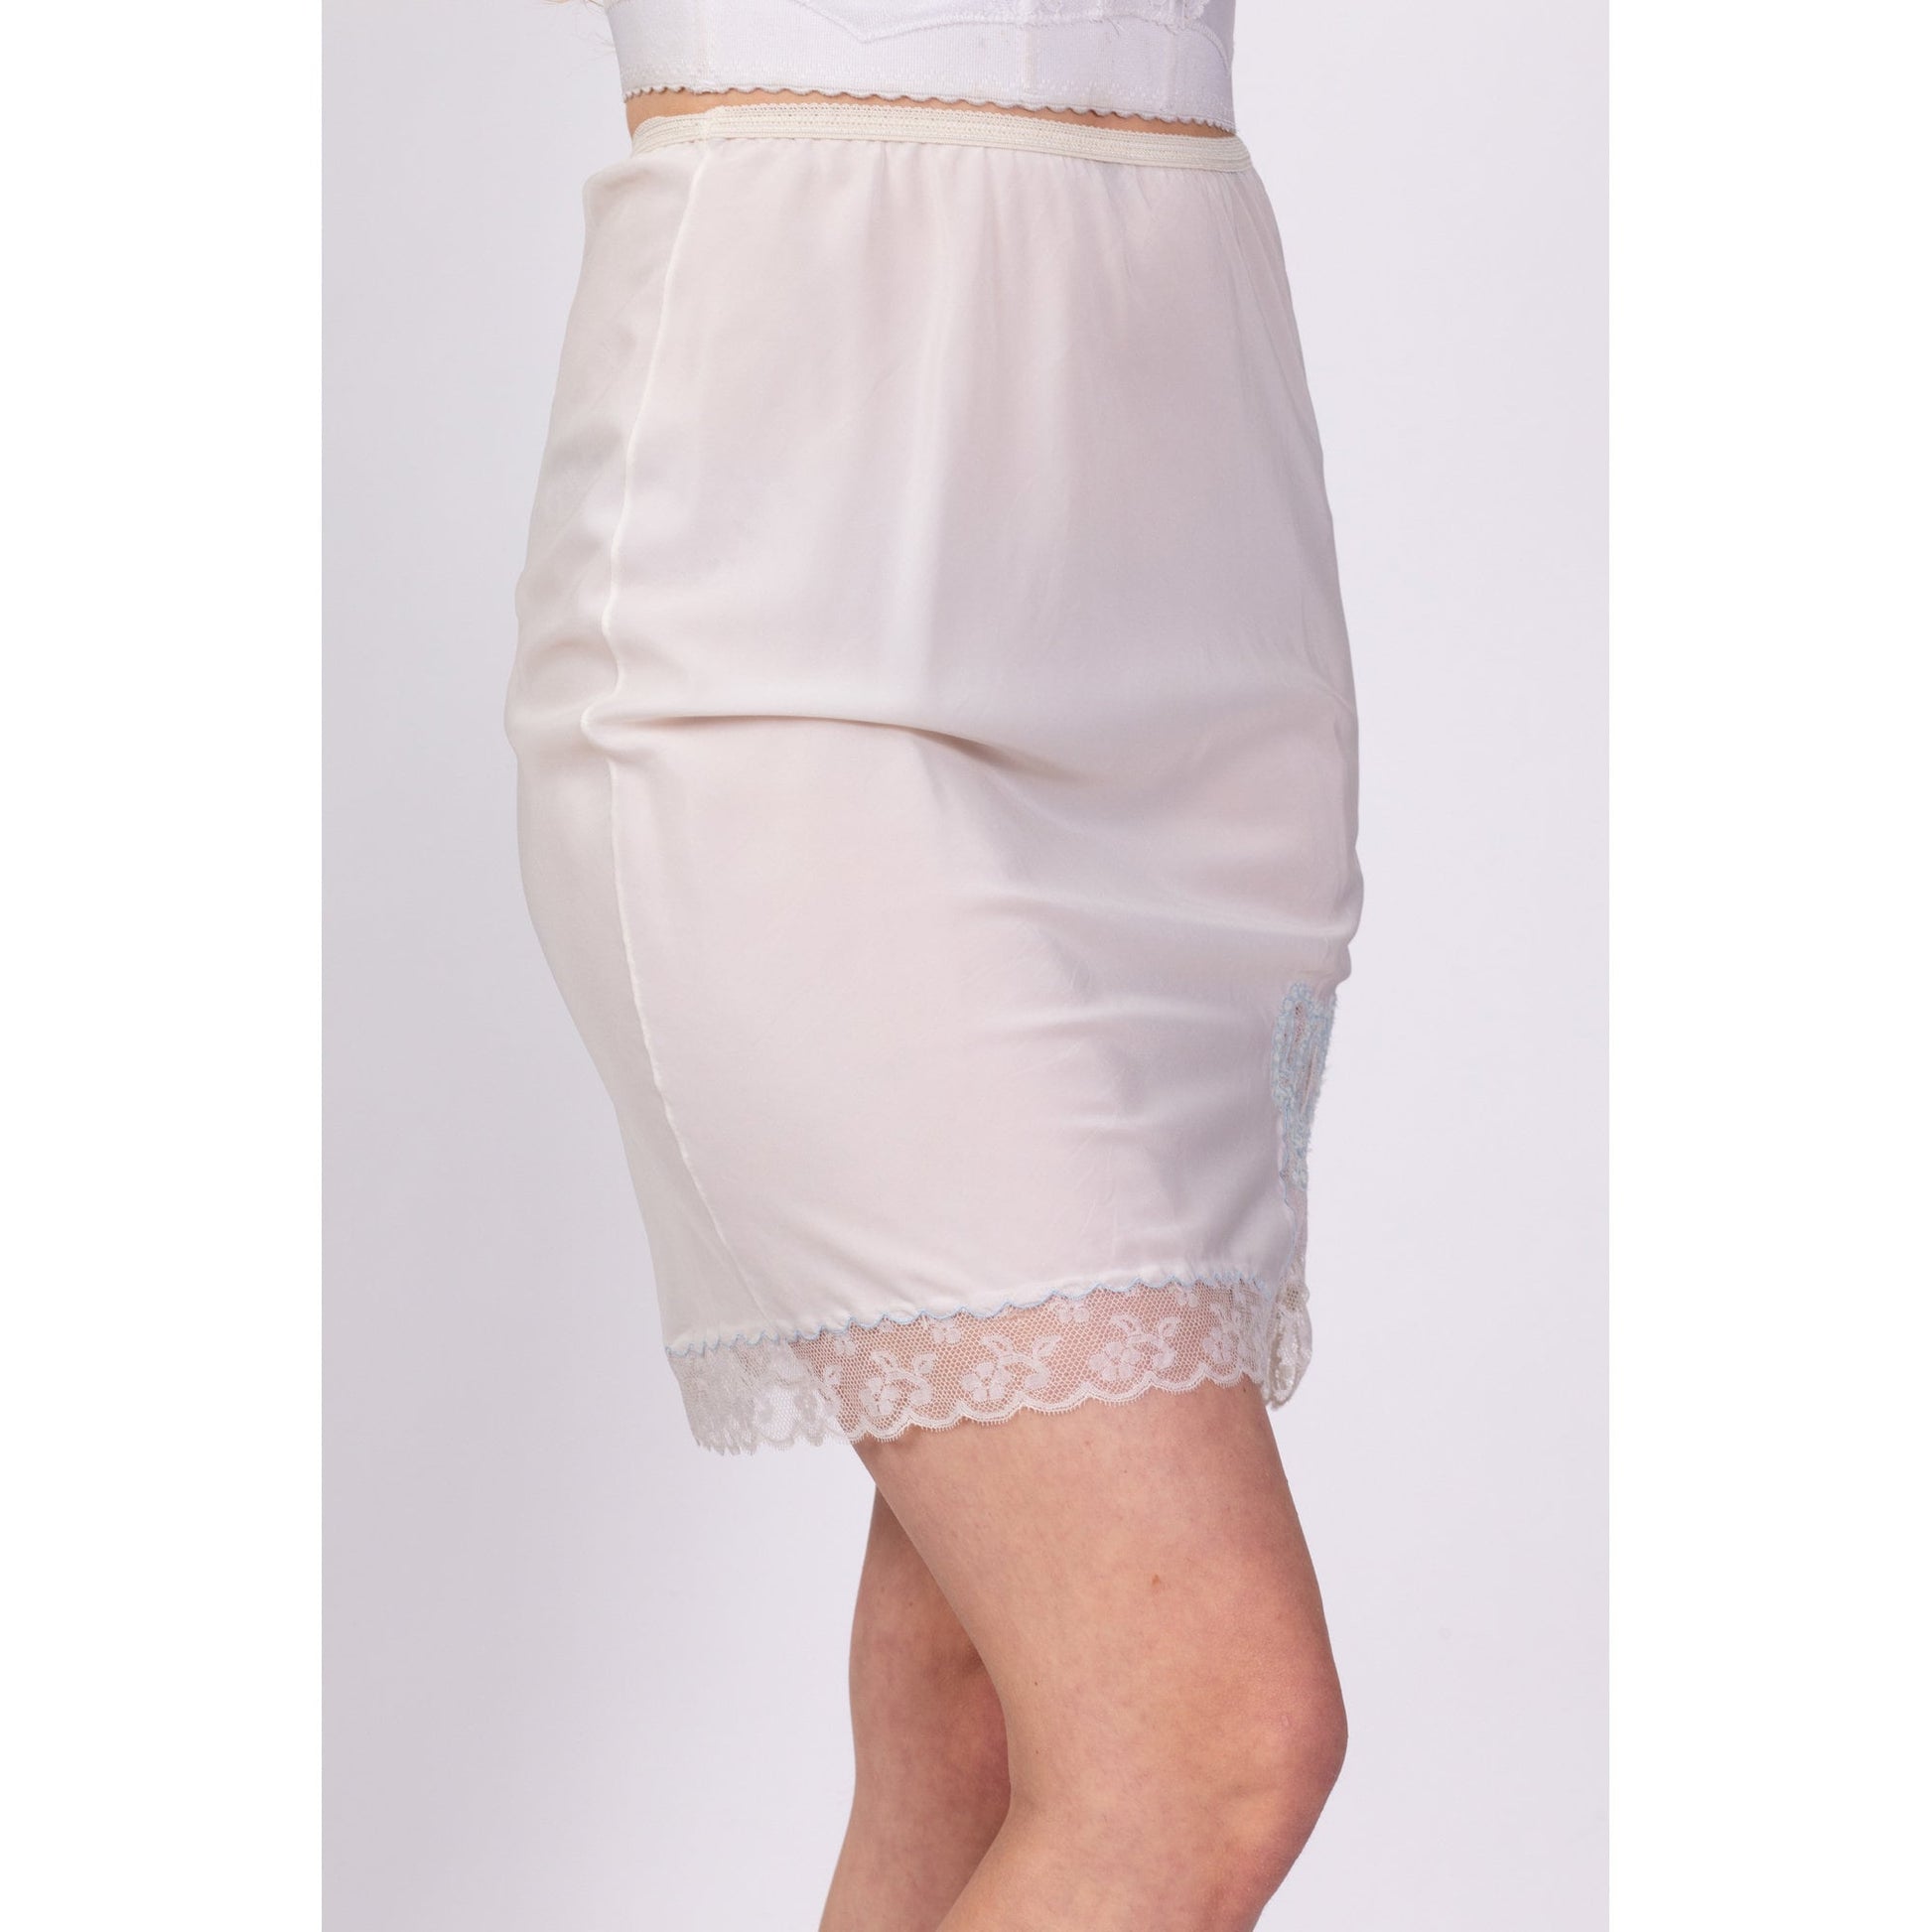 70s Lace Trim Mini Skirt Slip - XS to Small 